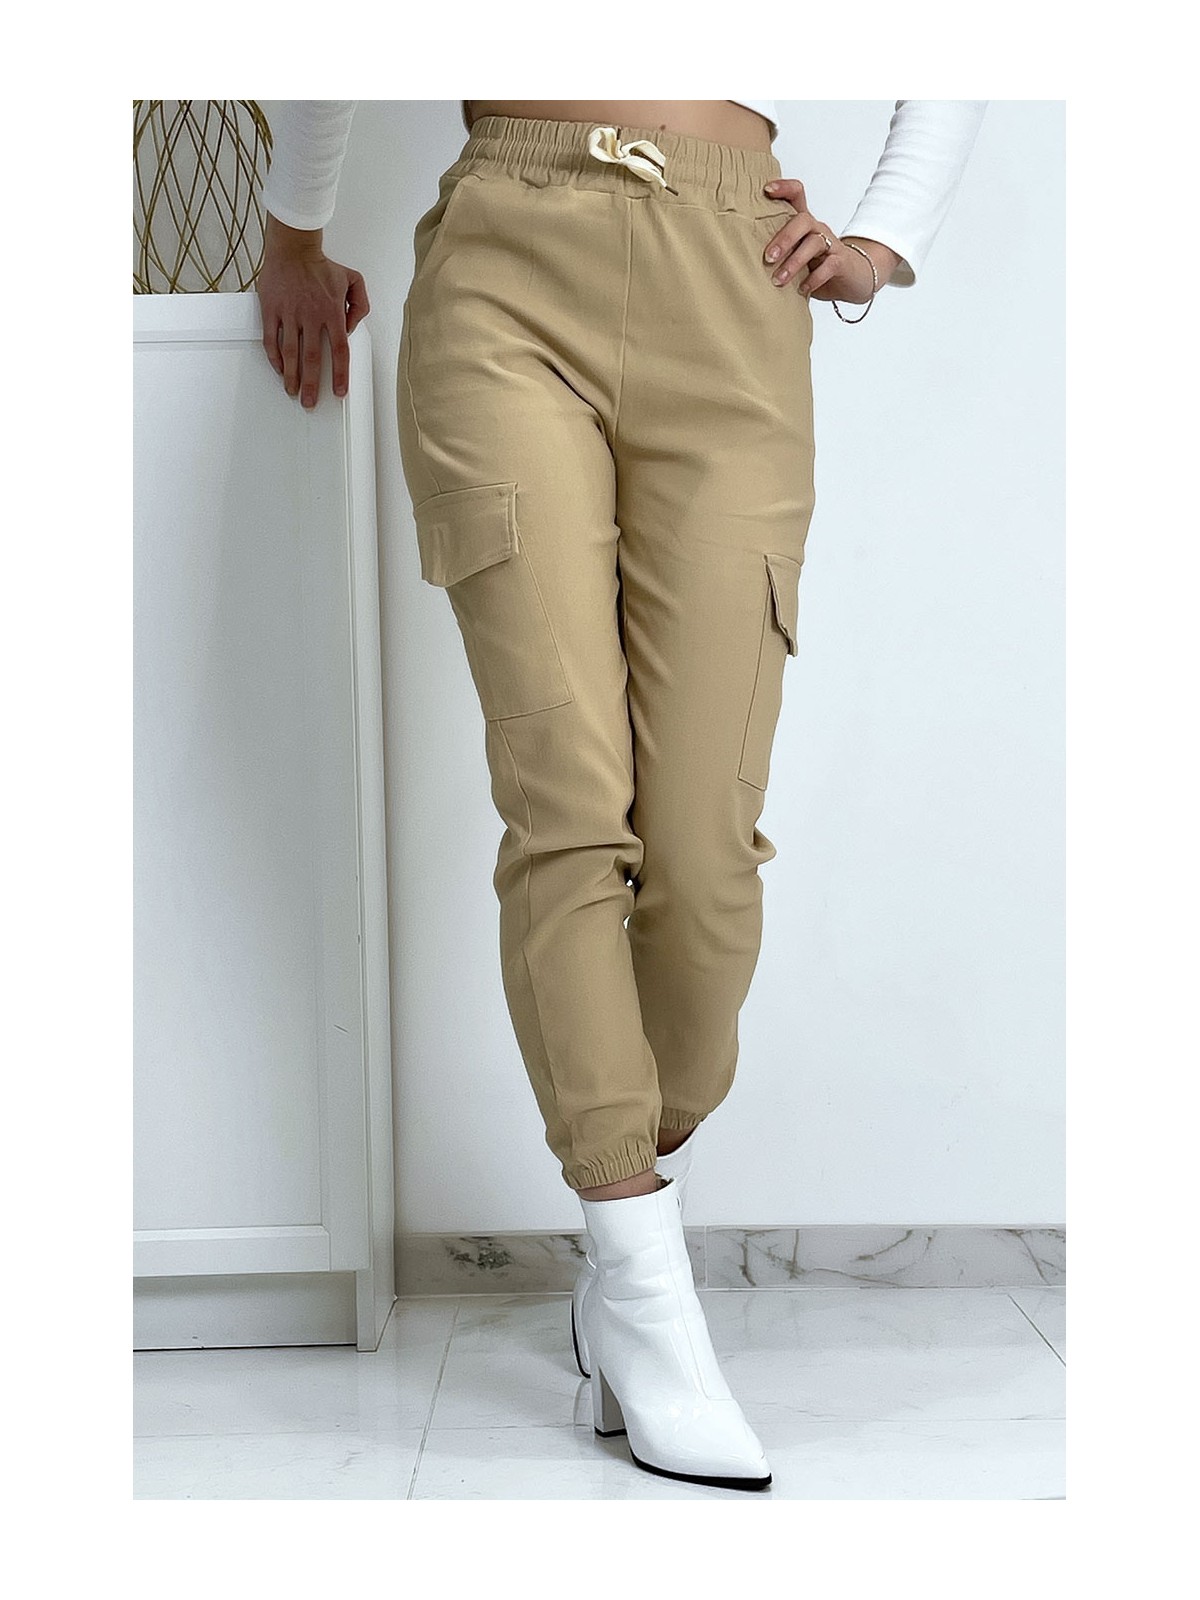 Pantalon treillis beige en strech avec poches - 4